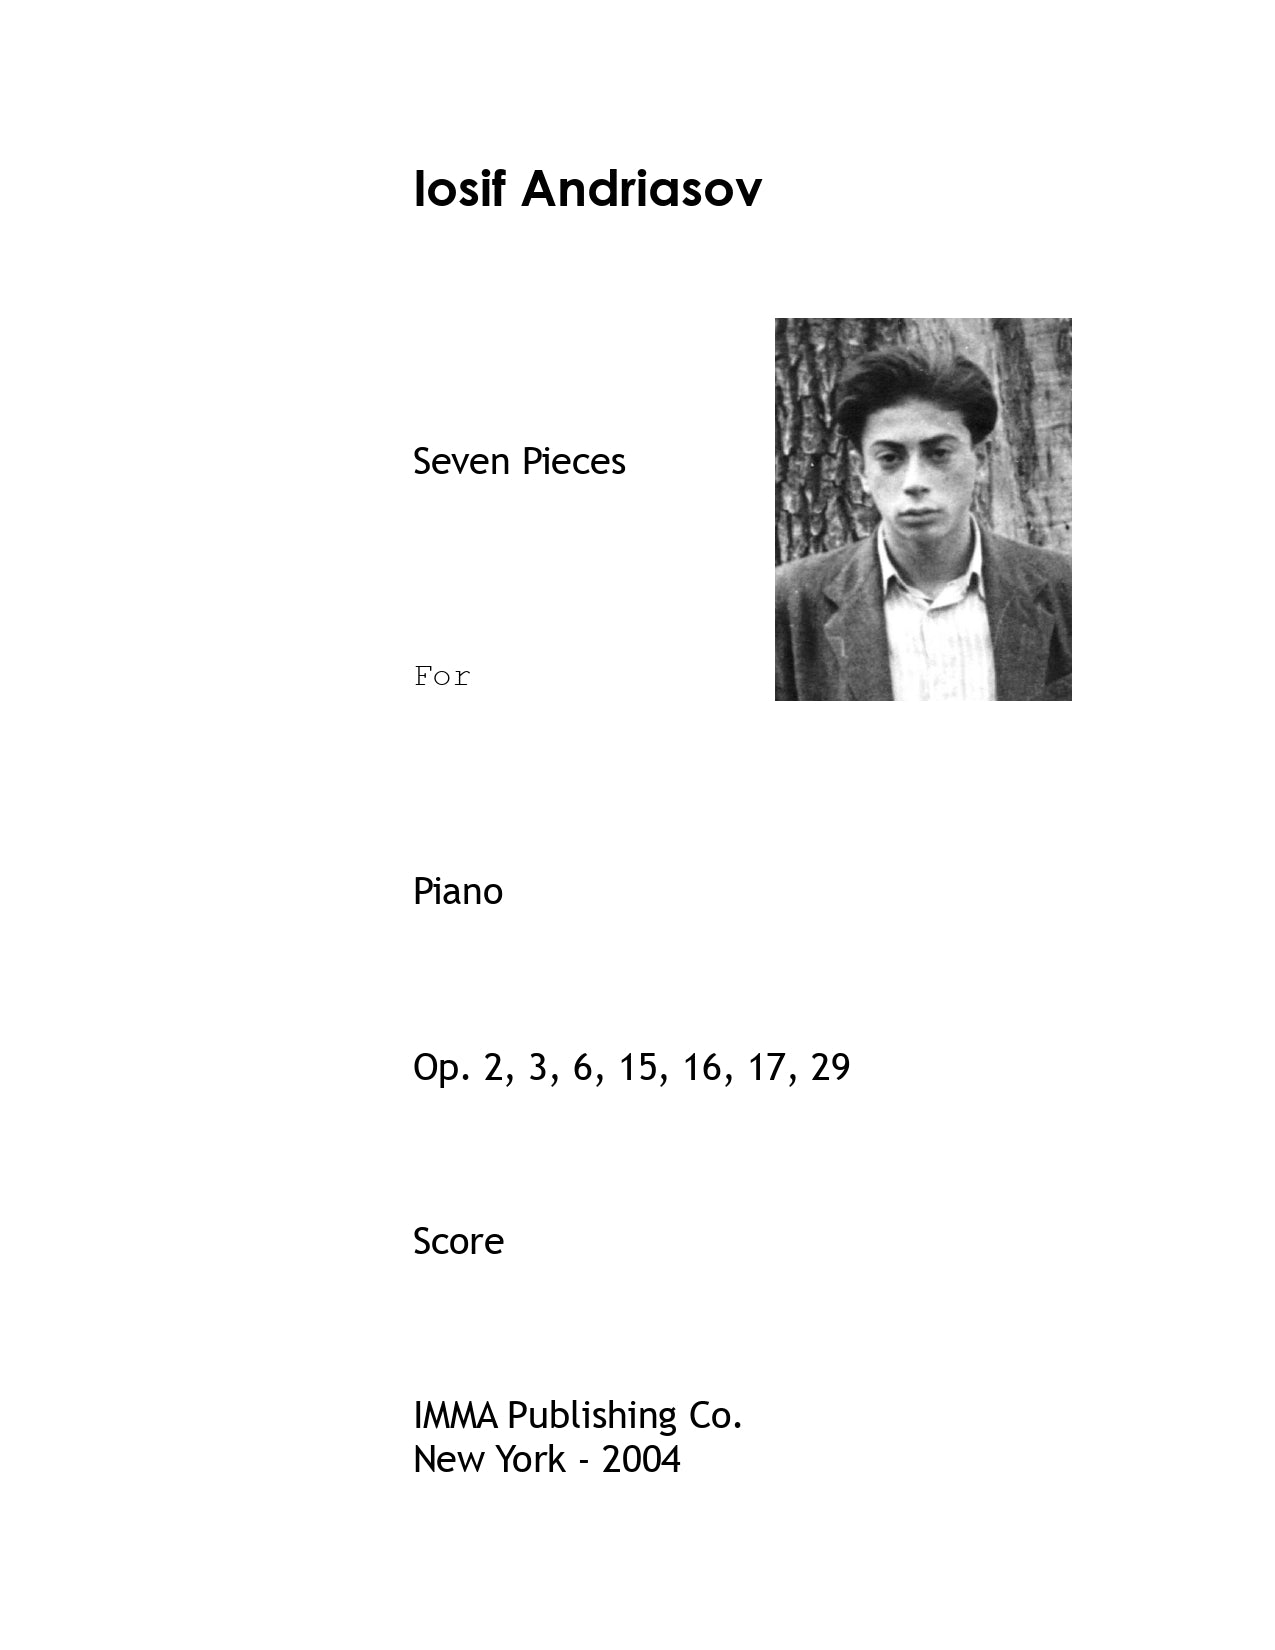 005. Iosif Andriasov: Seven Pieces, Op. 2, 3, 6, 15, 16, 17, 29 for Piano